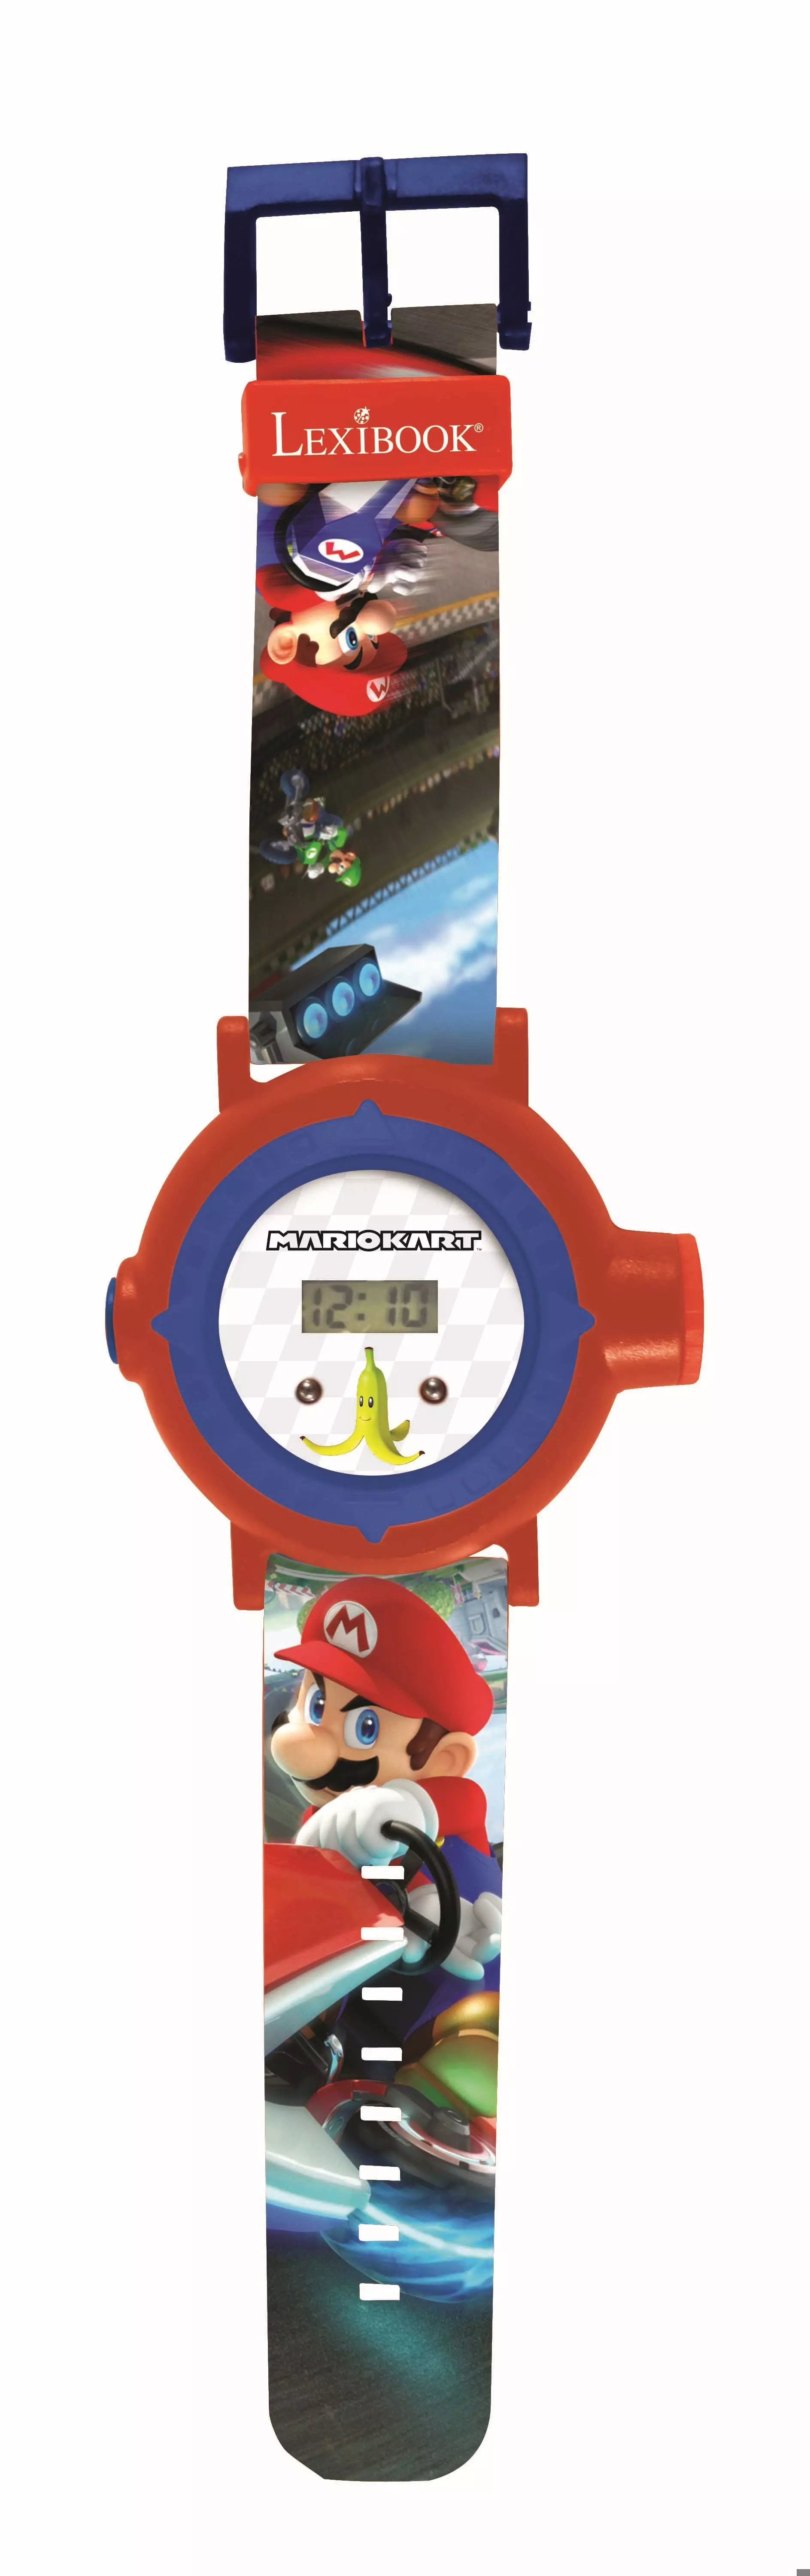 Lexibook Super Mario Digital Projection Watch